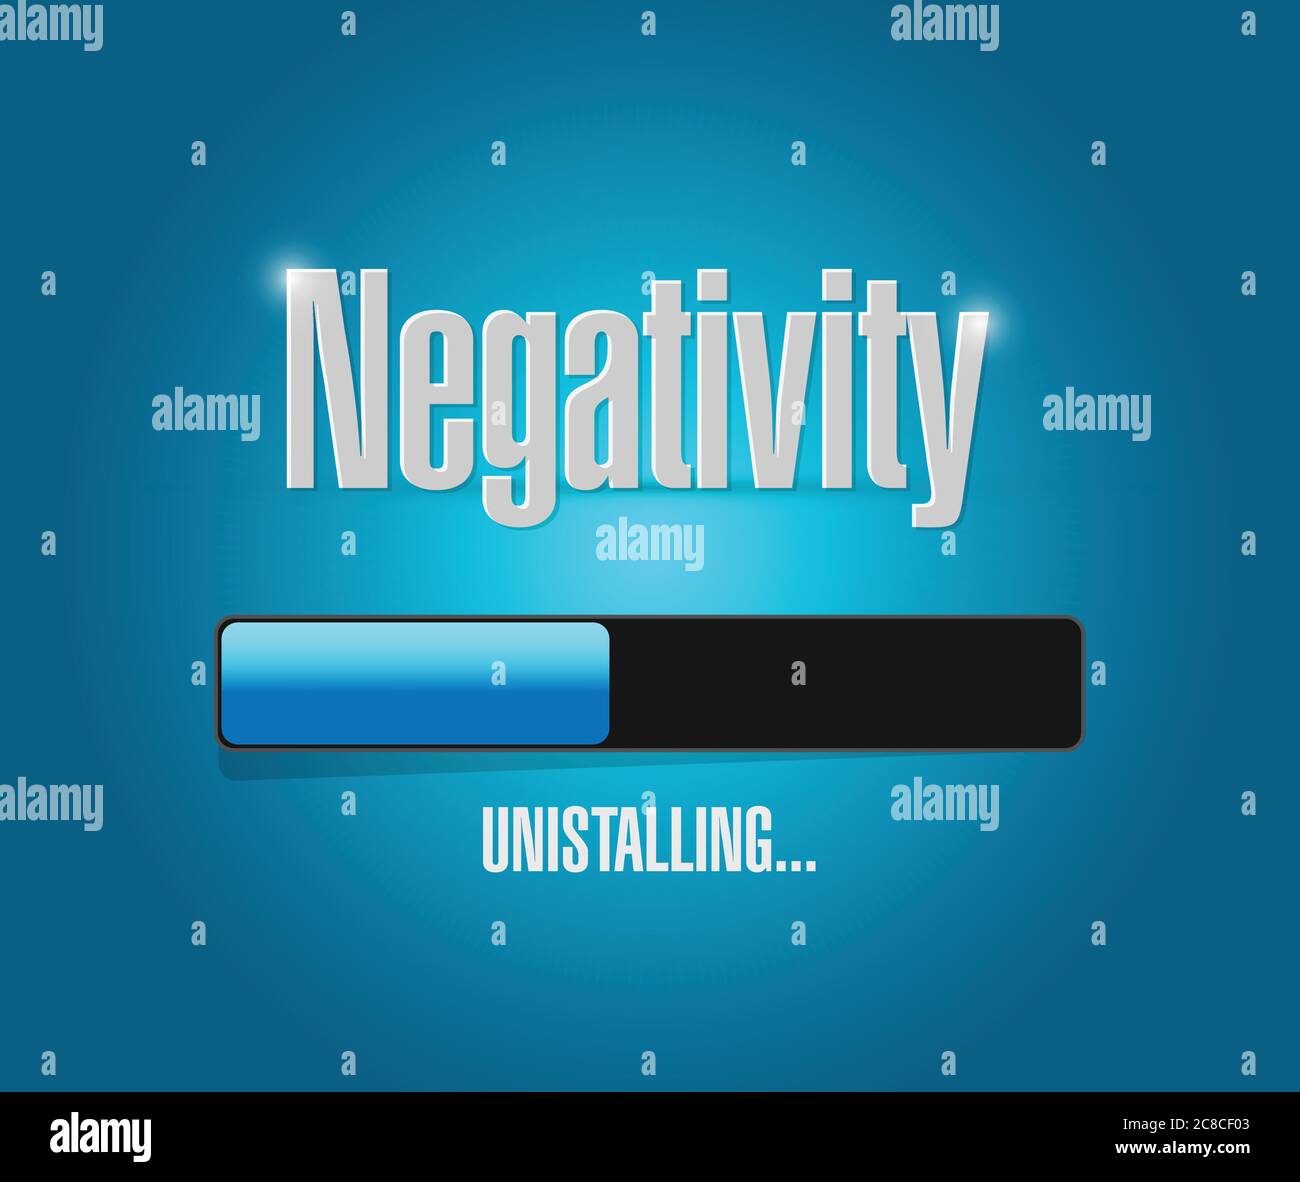 Uninstalling negativity illustration design over a blue background Stock Vector